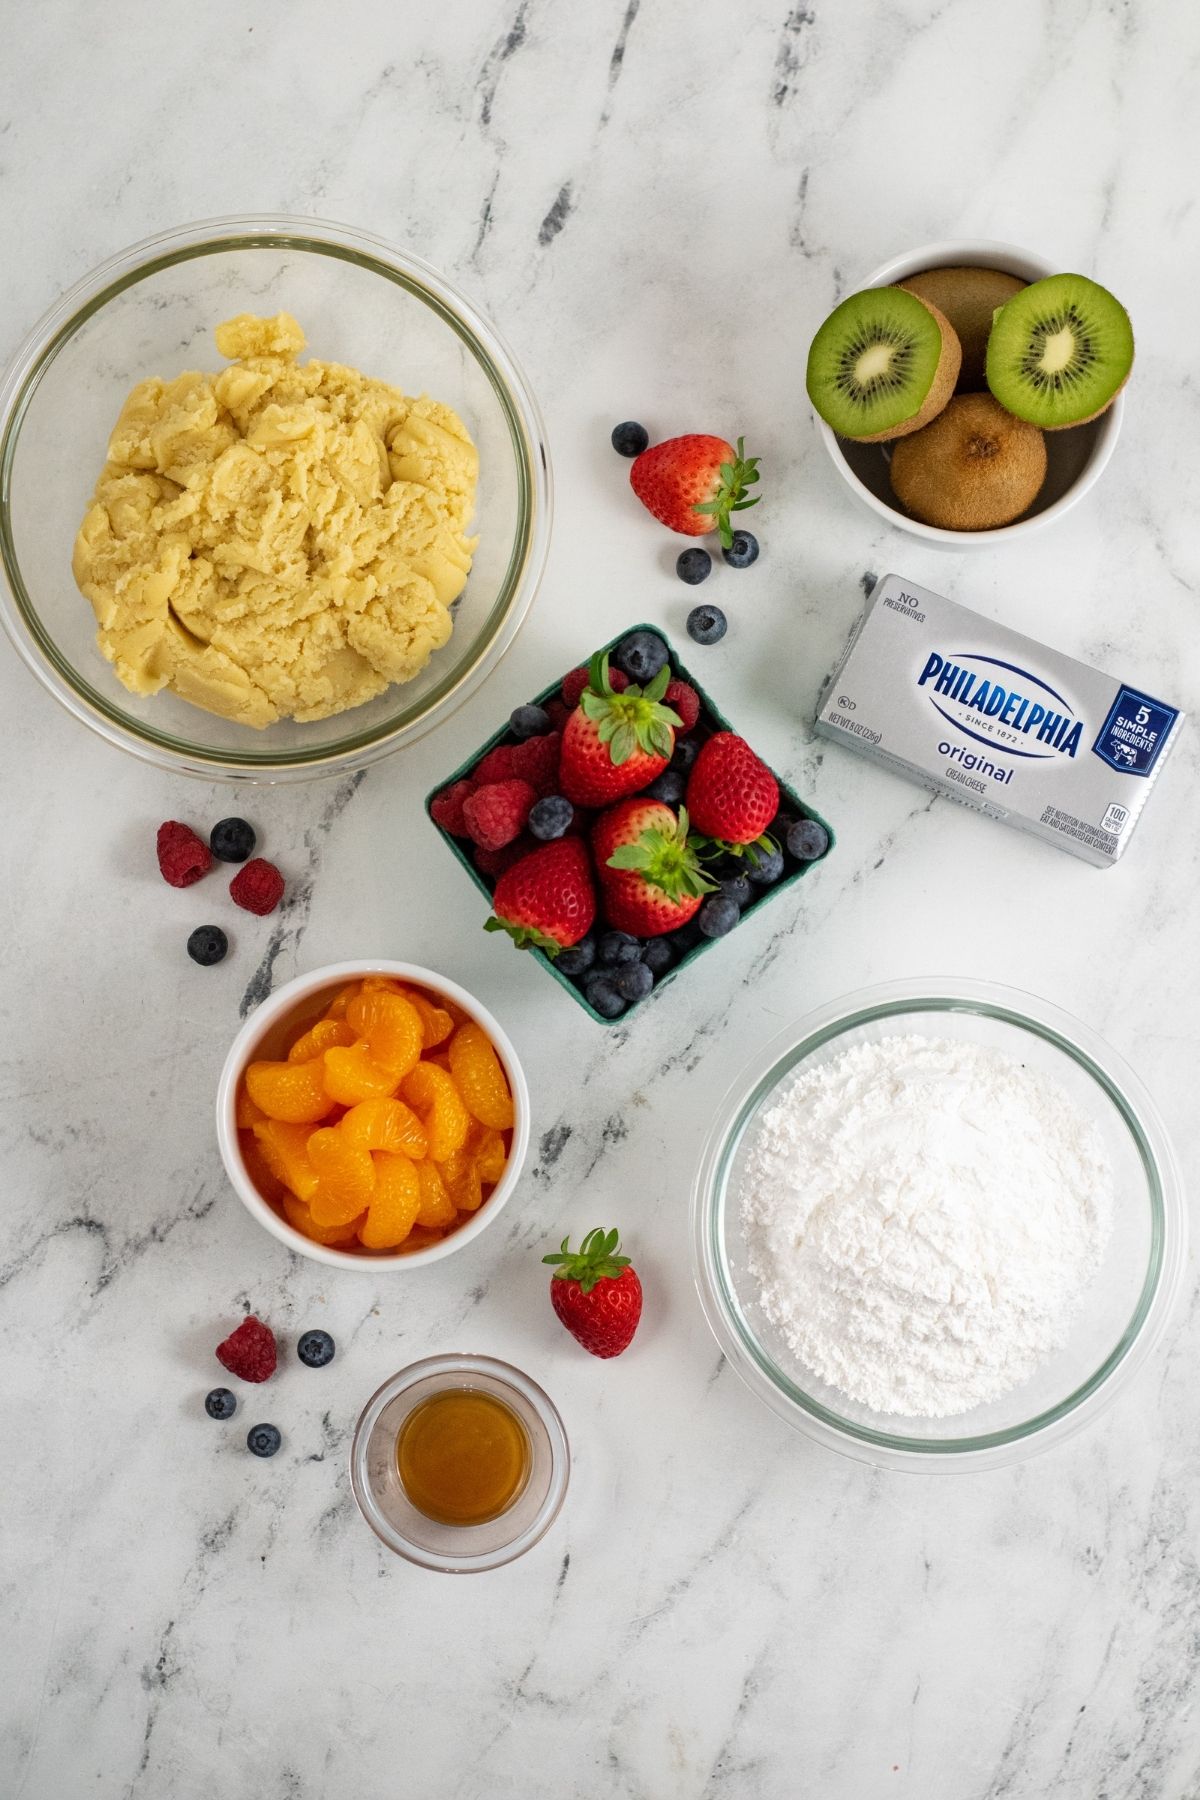 ingredients on white counter: cookie dough, cream cheese, powdered sugar, strawberries, blueberries, kiwi, and mandarin oranges